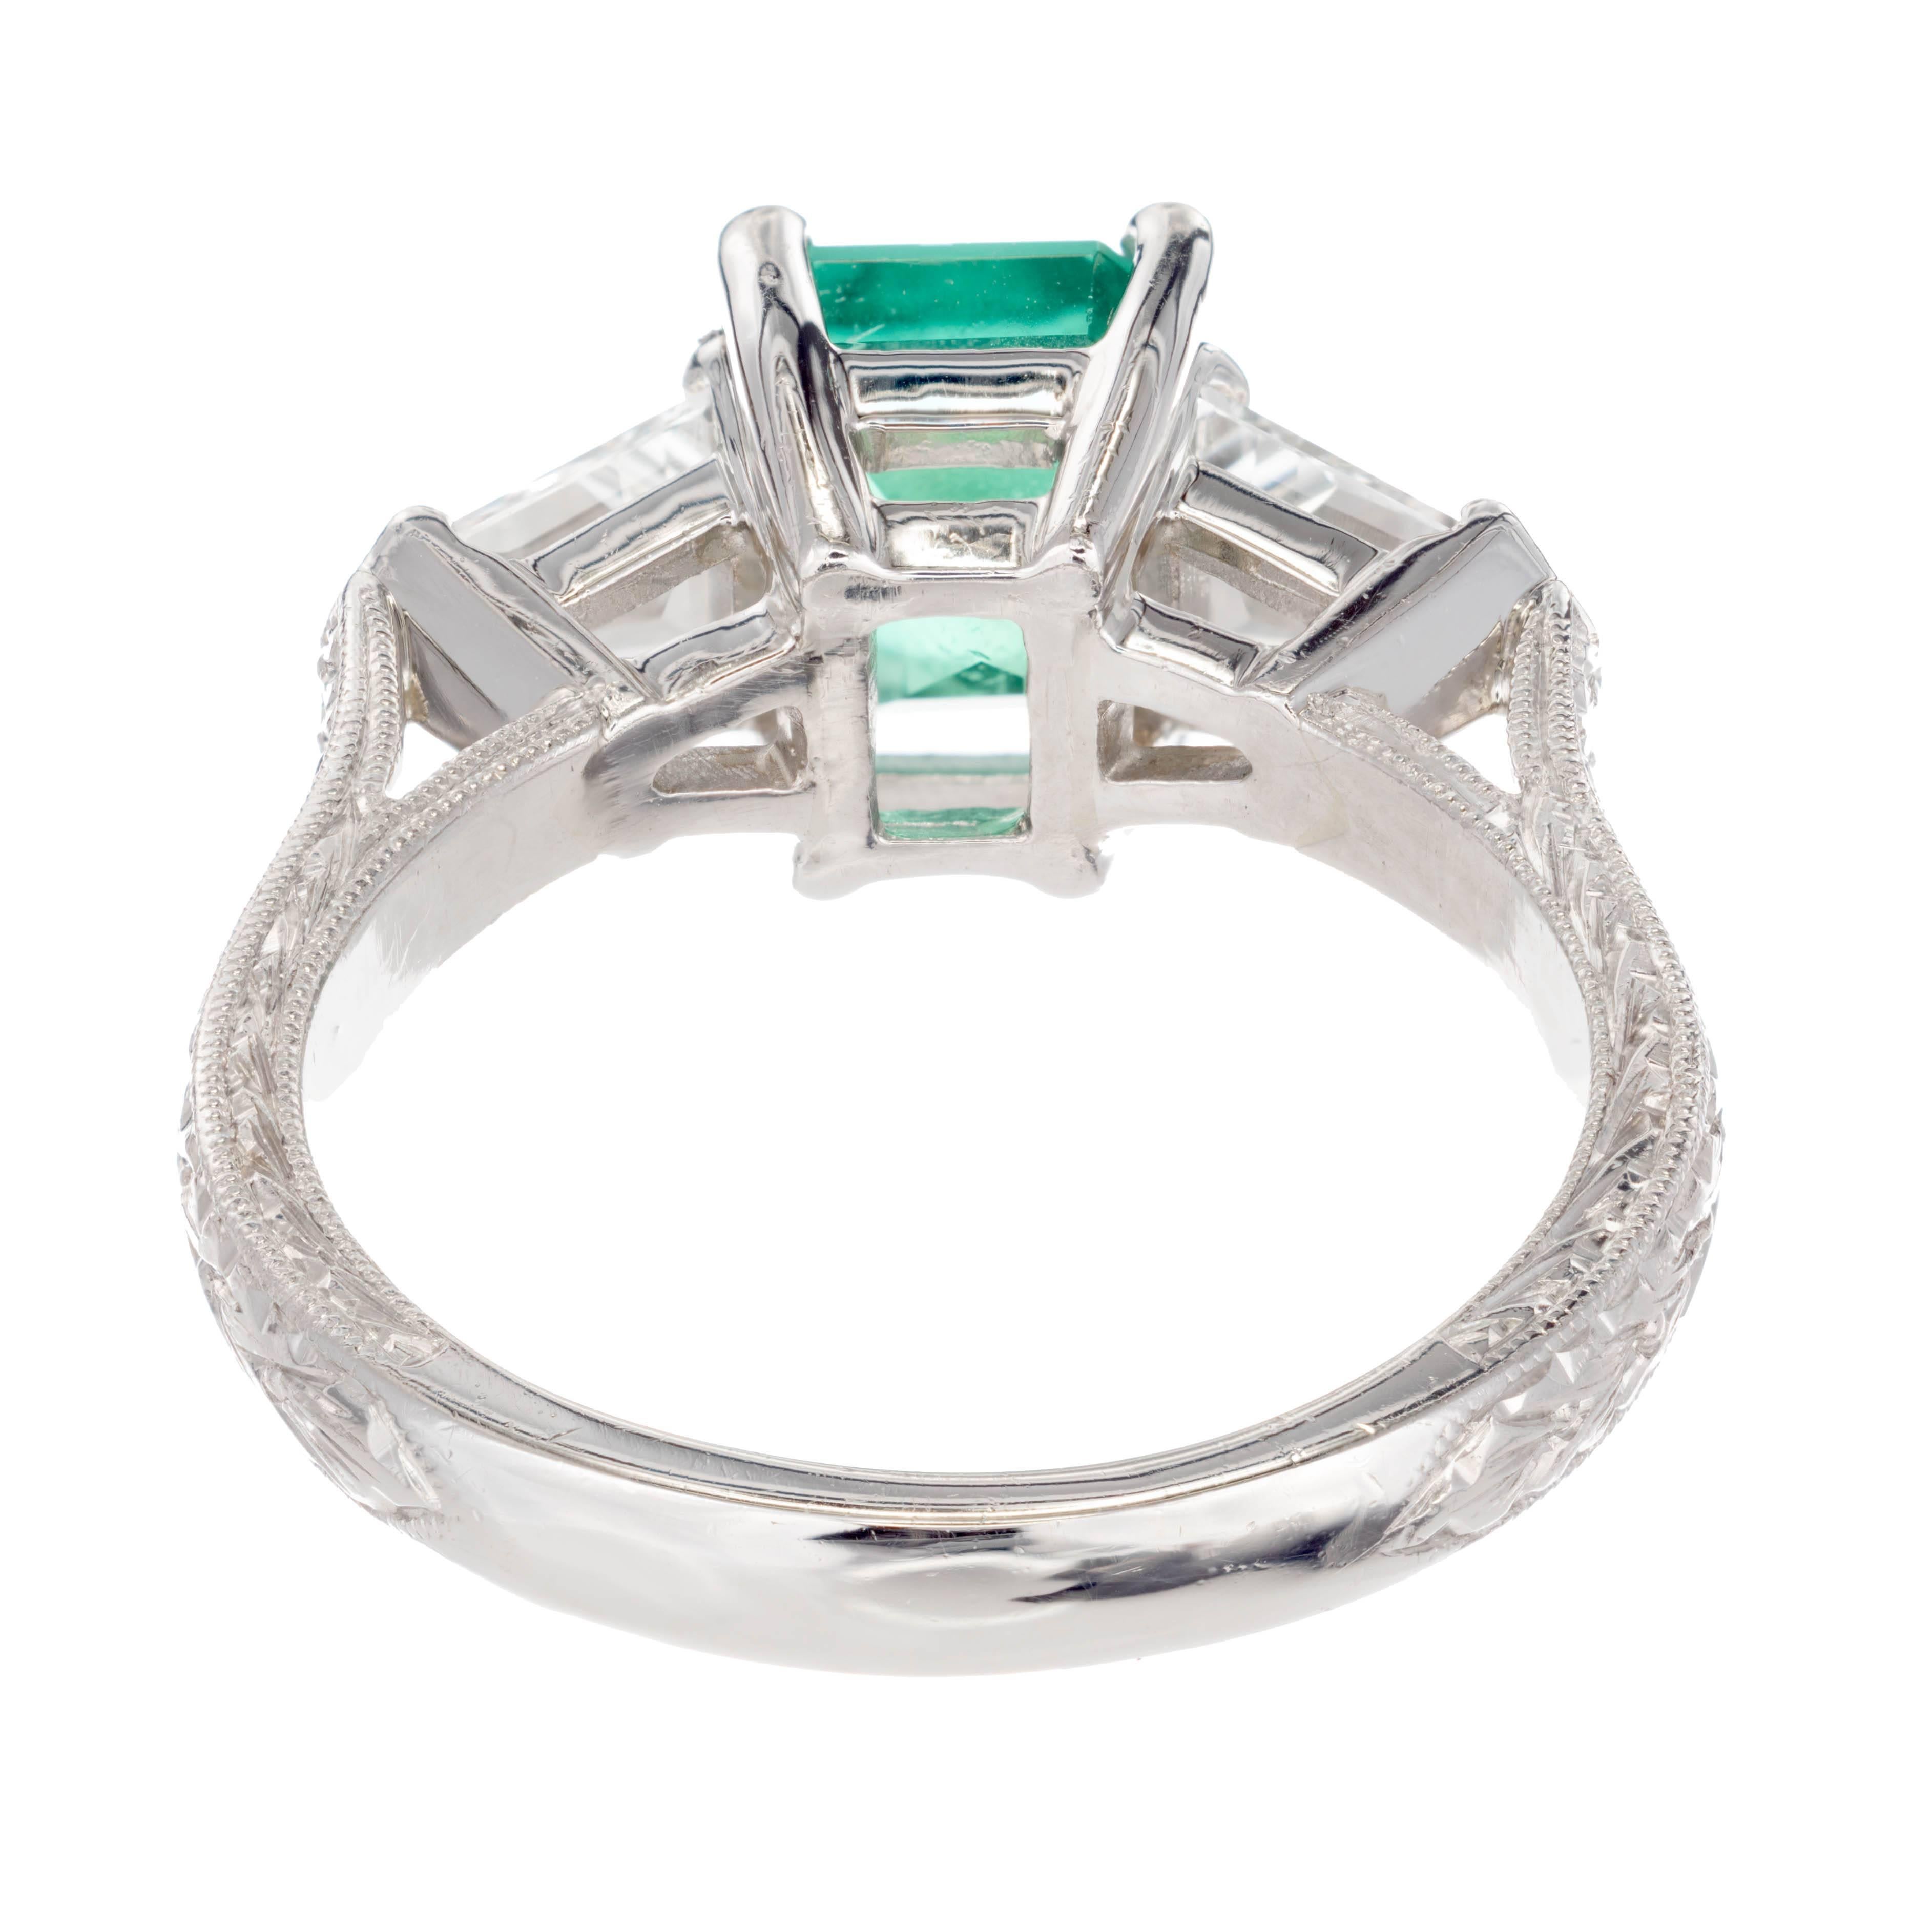 Emerald Cut Peter Suchy 1.73 Carat Emerald Diamond Platinum Three-Stone Engagement Ring